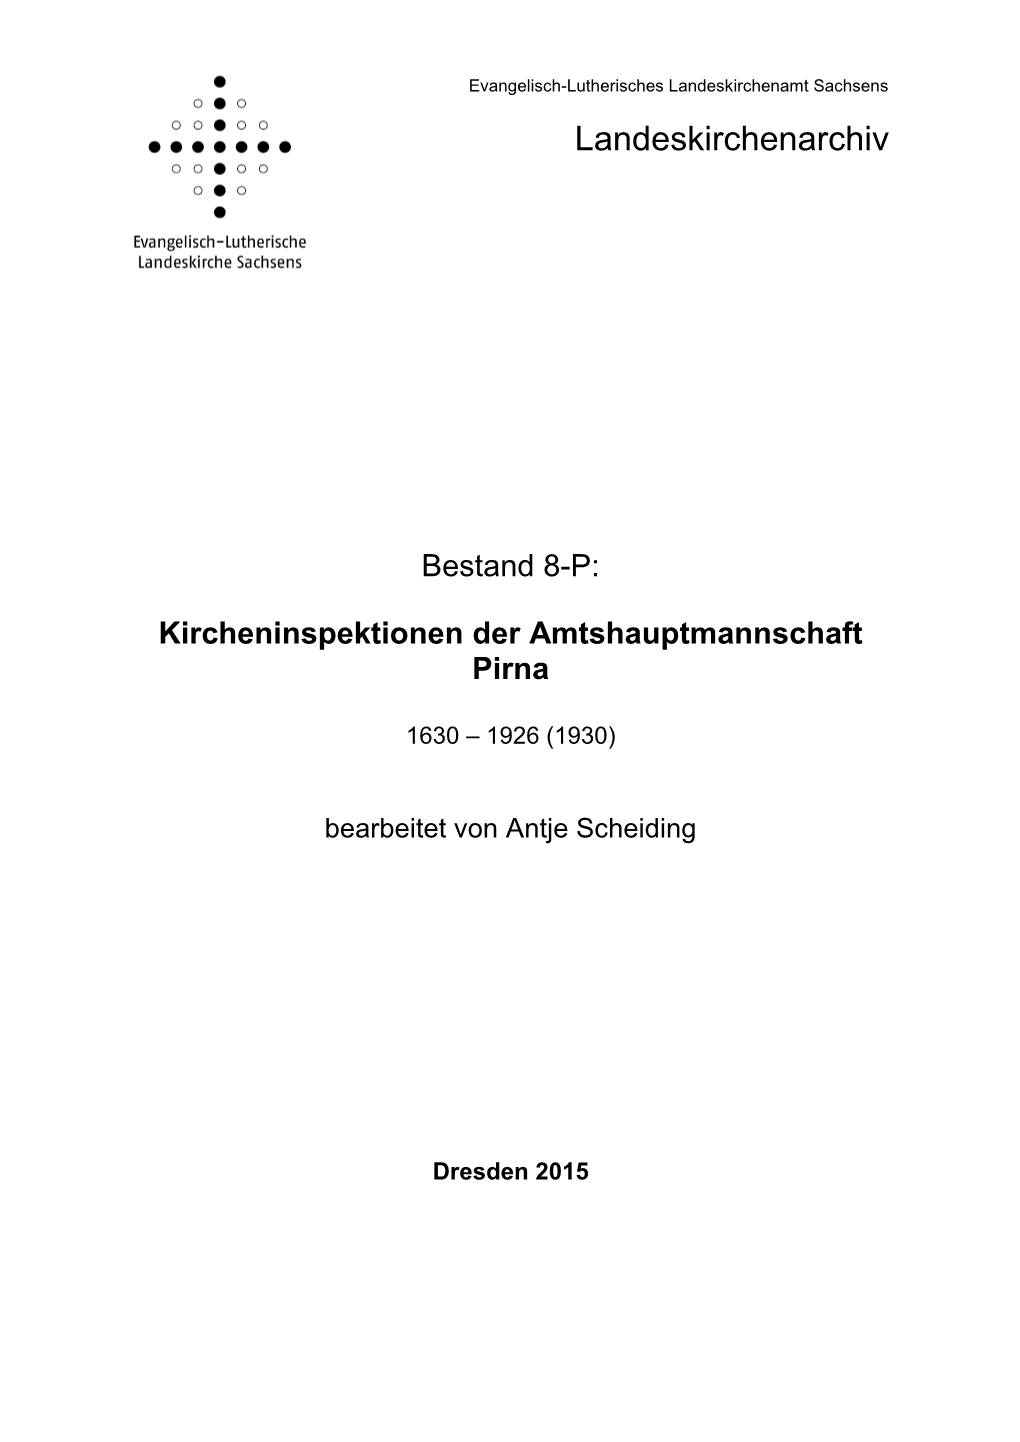 Bestand 8-P: Kircheninspektionen Der Amtshauptmannschaft Pirna